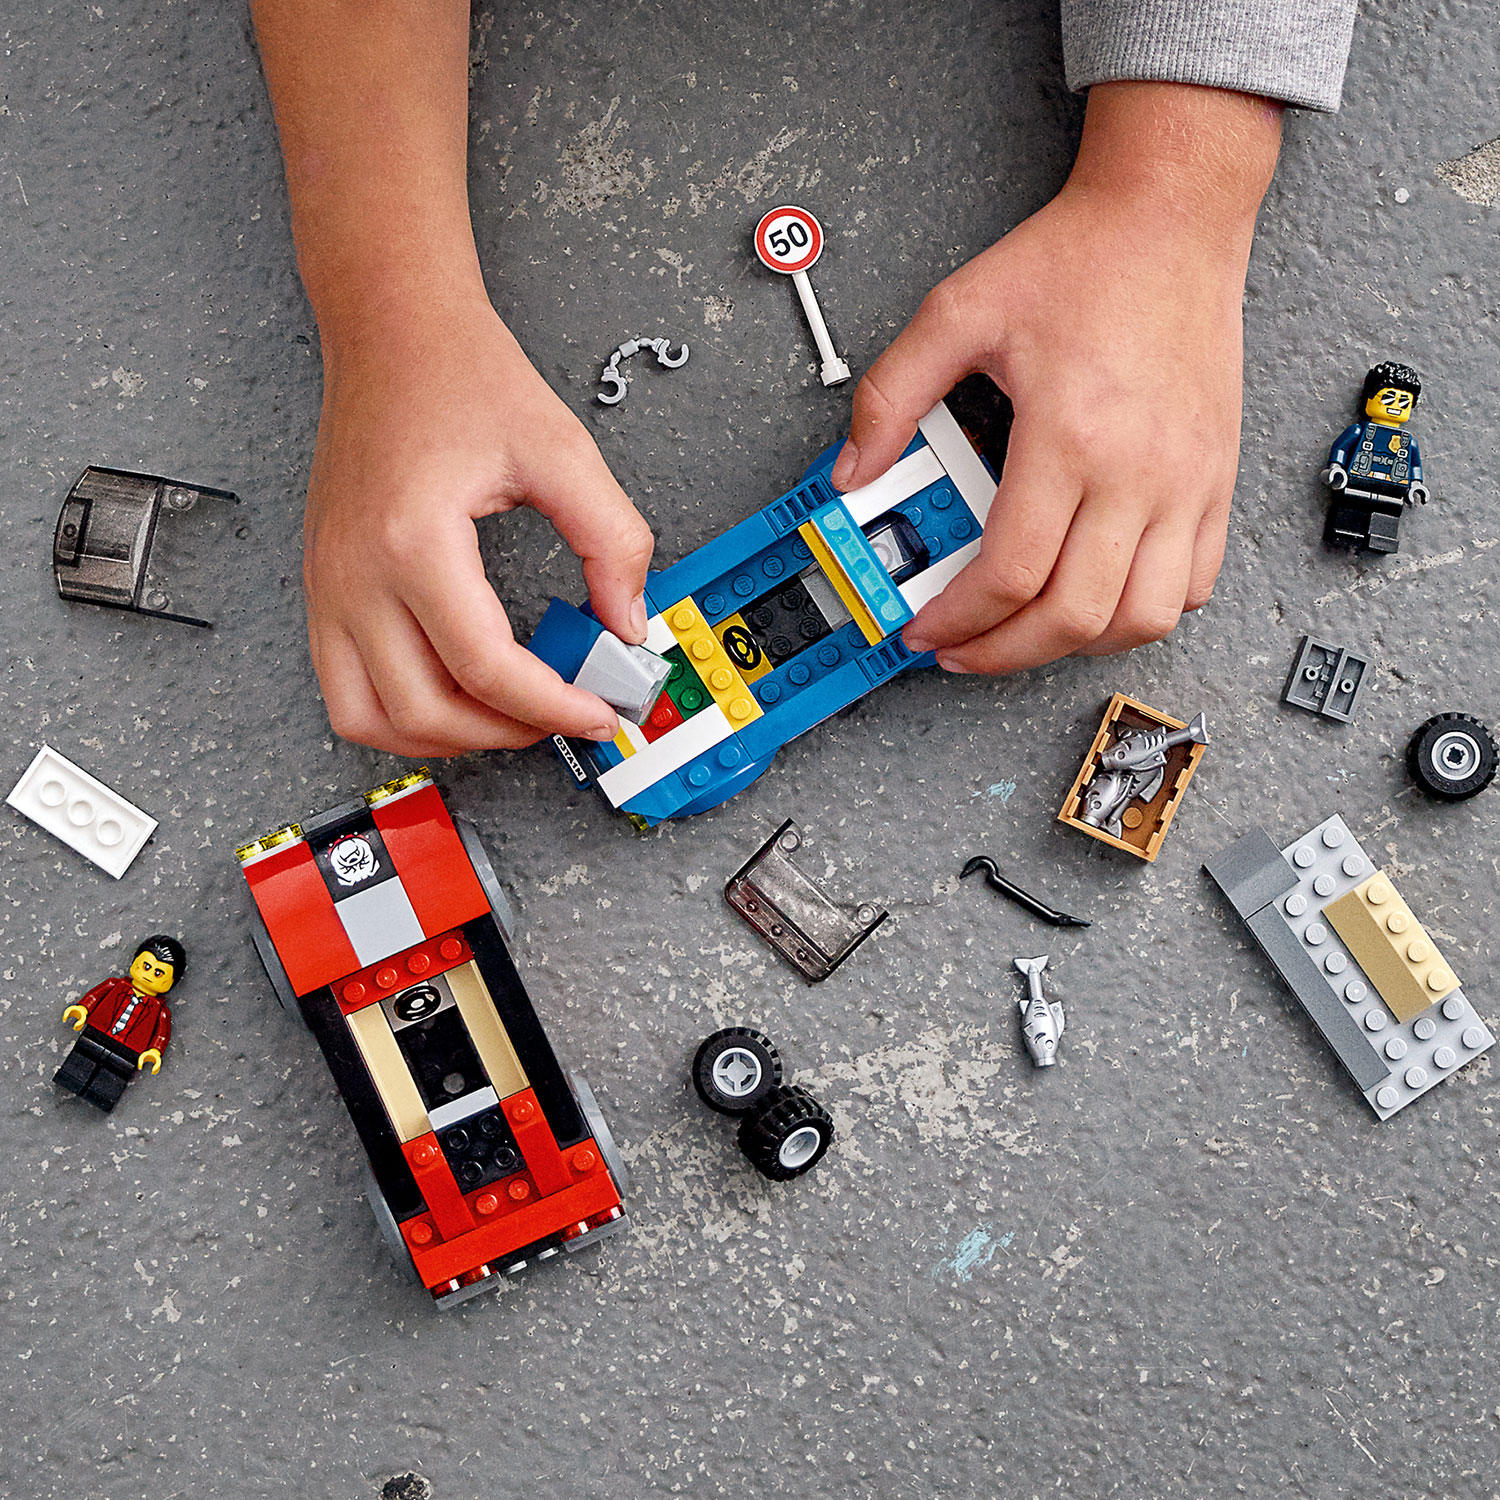 Конструктор LEGO City Police 60242 Арест на шоссе